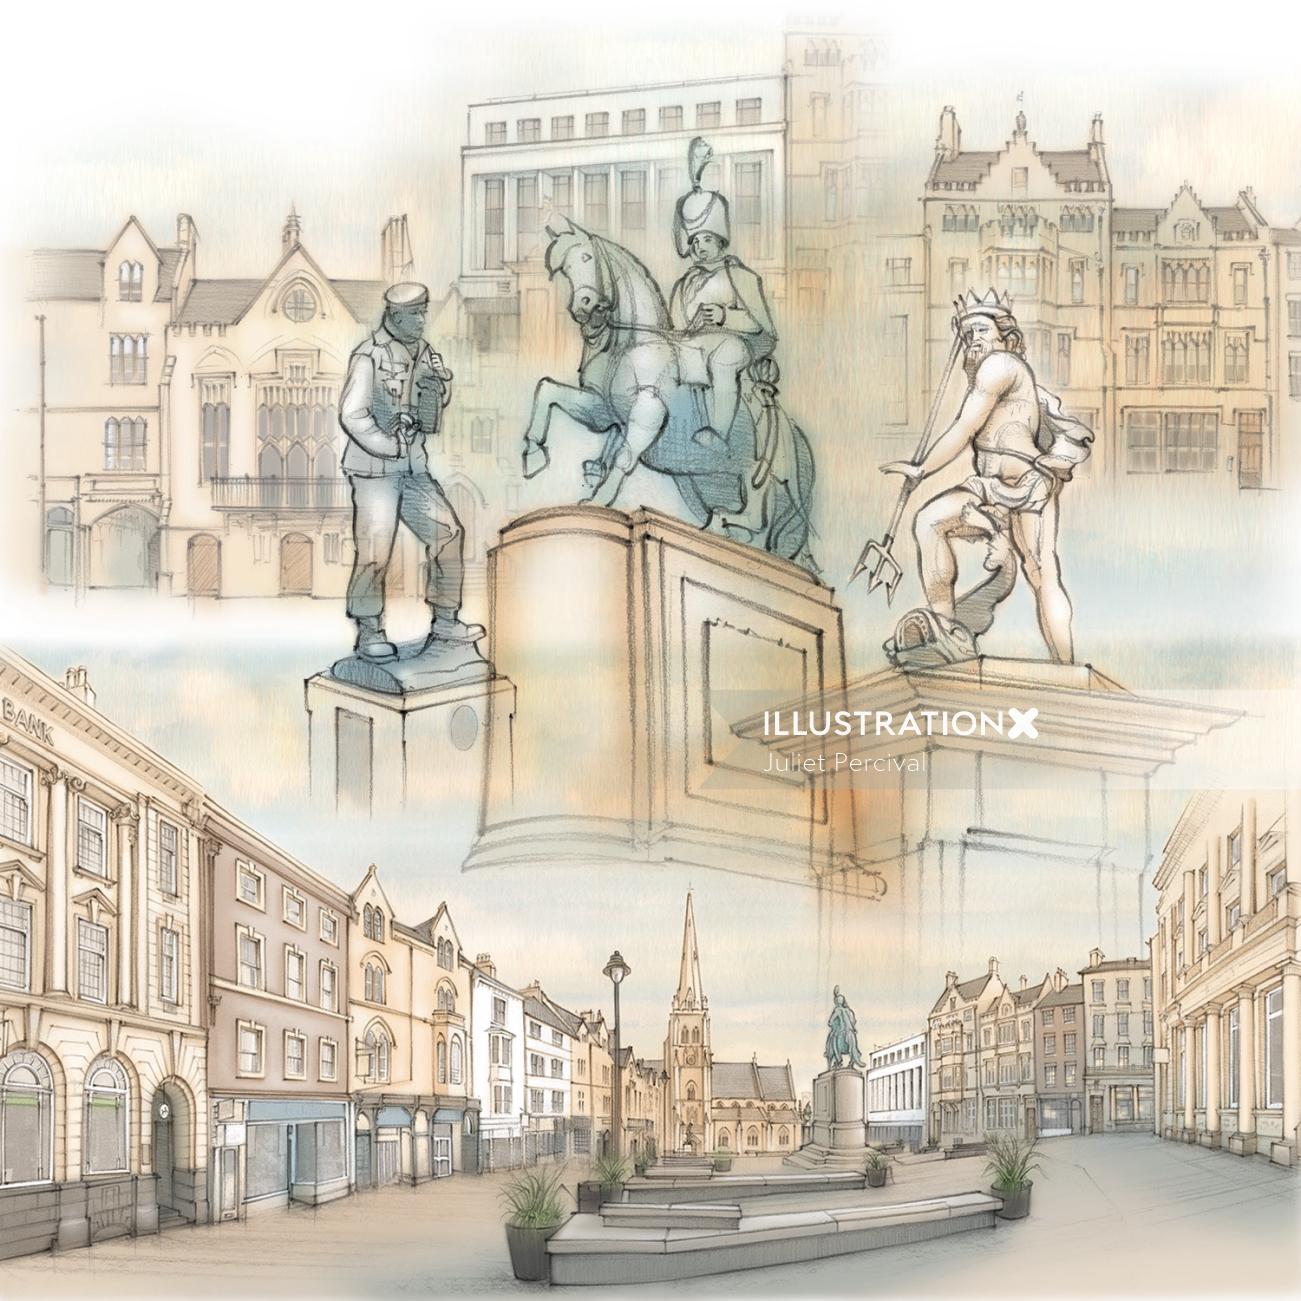 Durham, historical, statue, market place, Neptune, architecture,